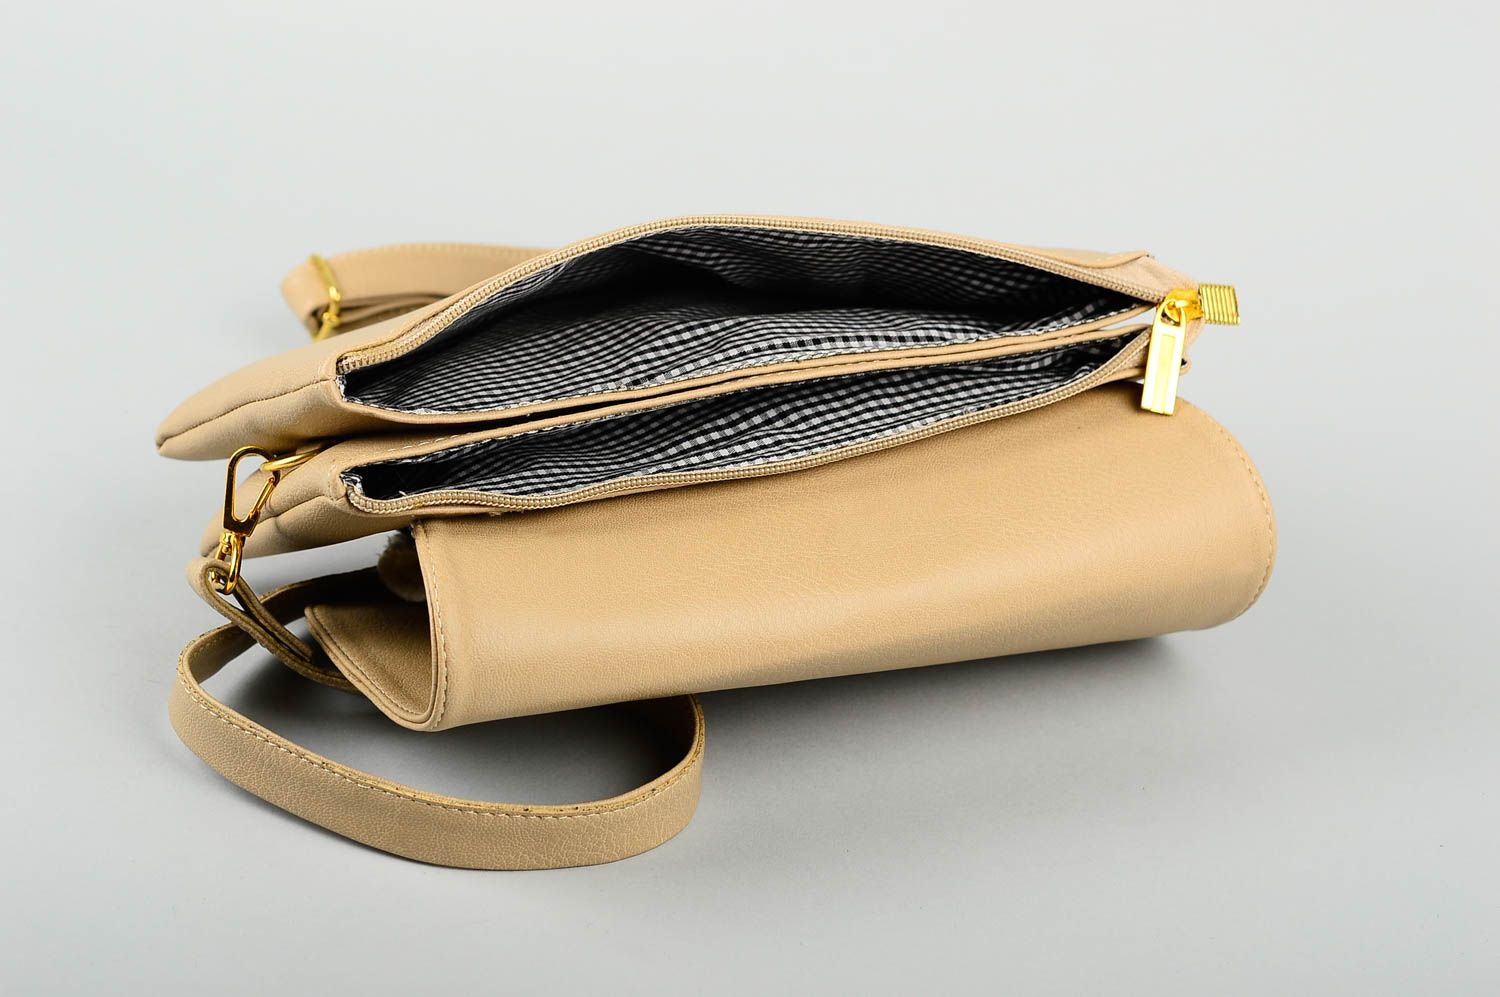 Unusual handmade bag design leather shoulder bag leather goods gifts for her photo 3